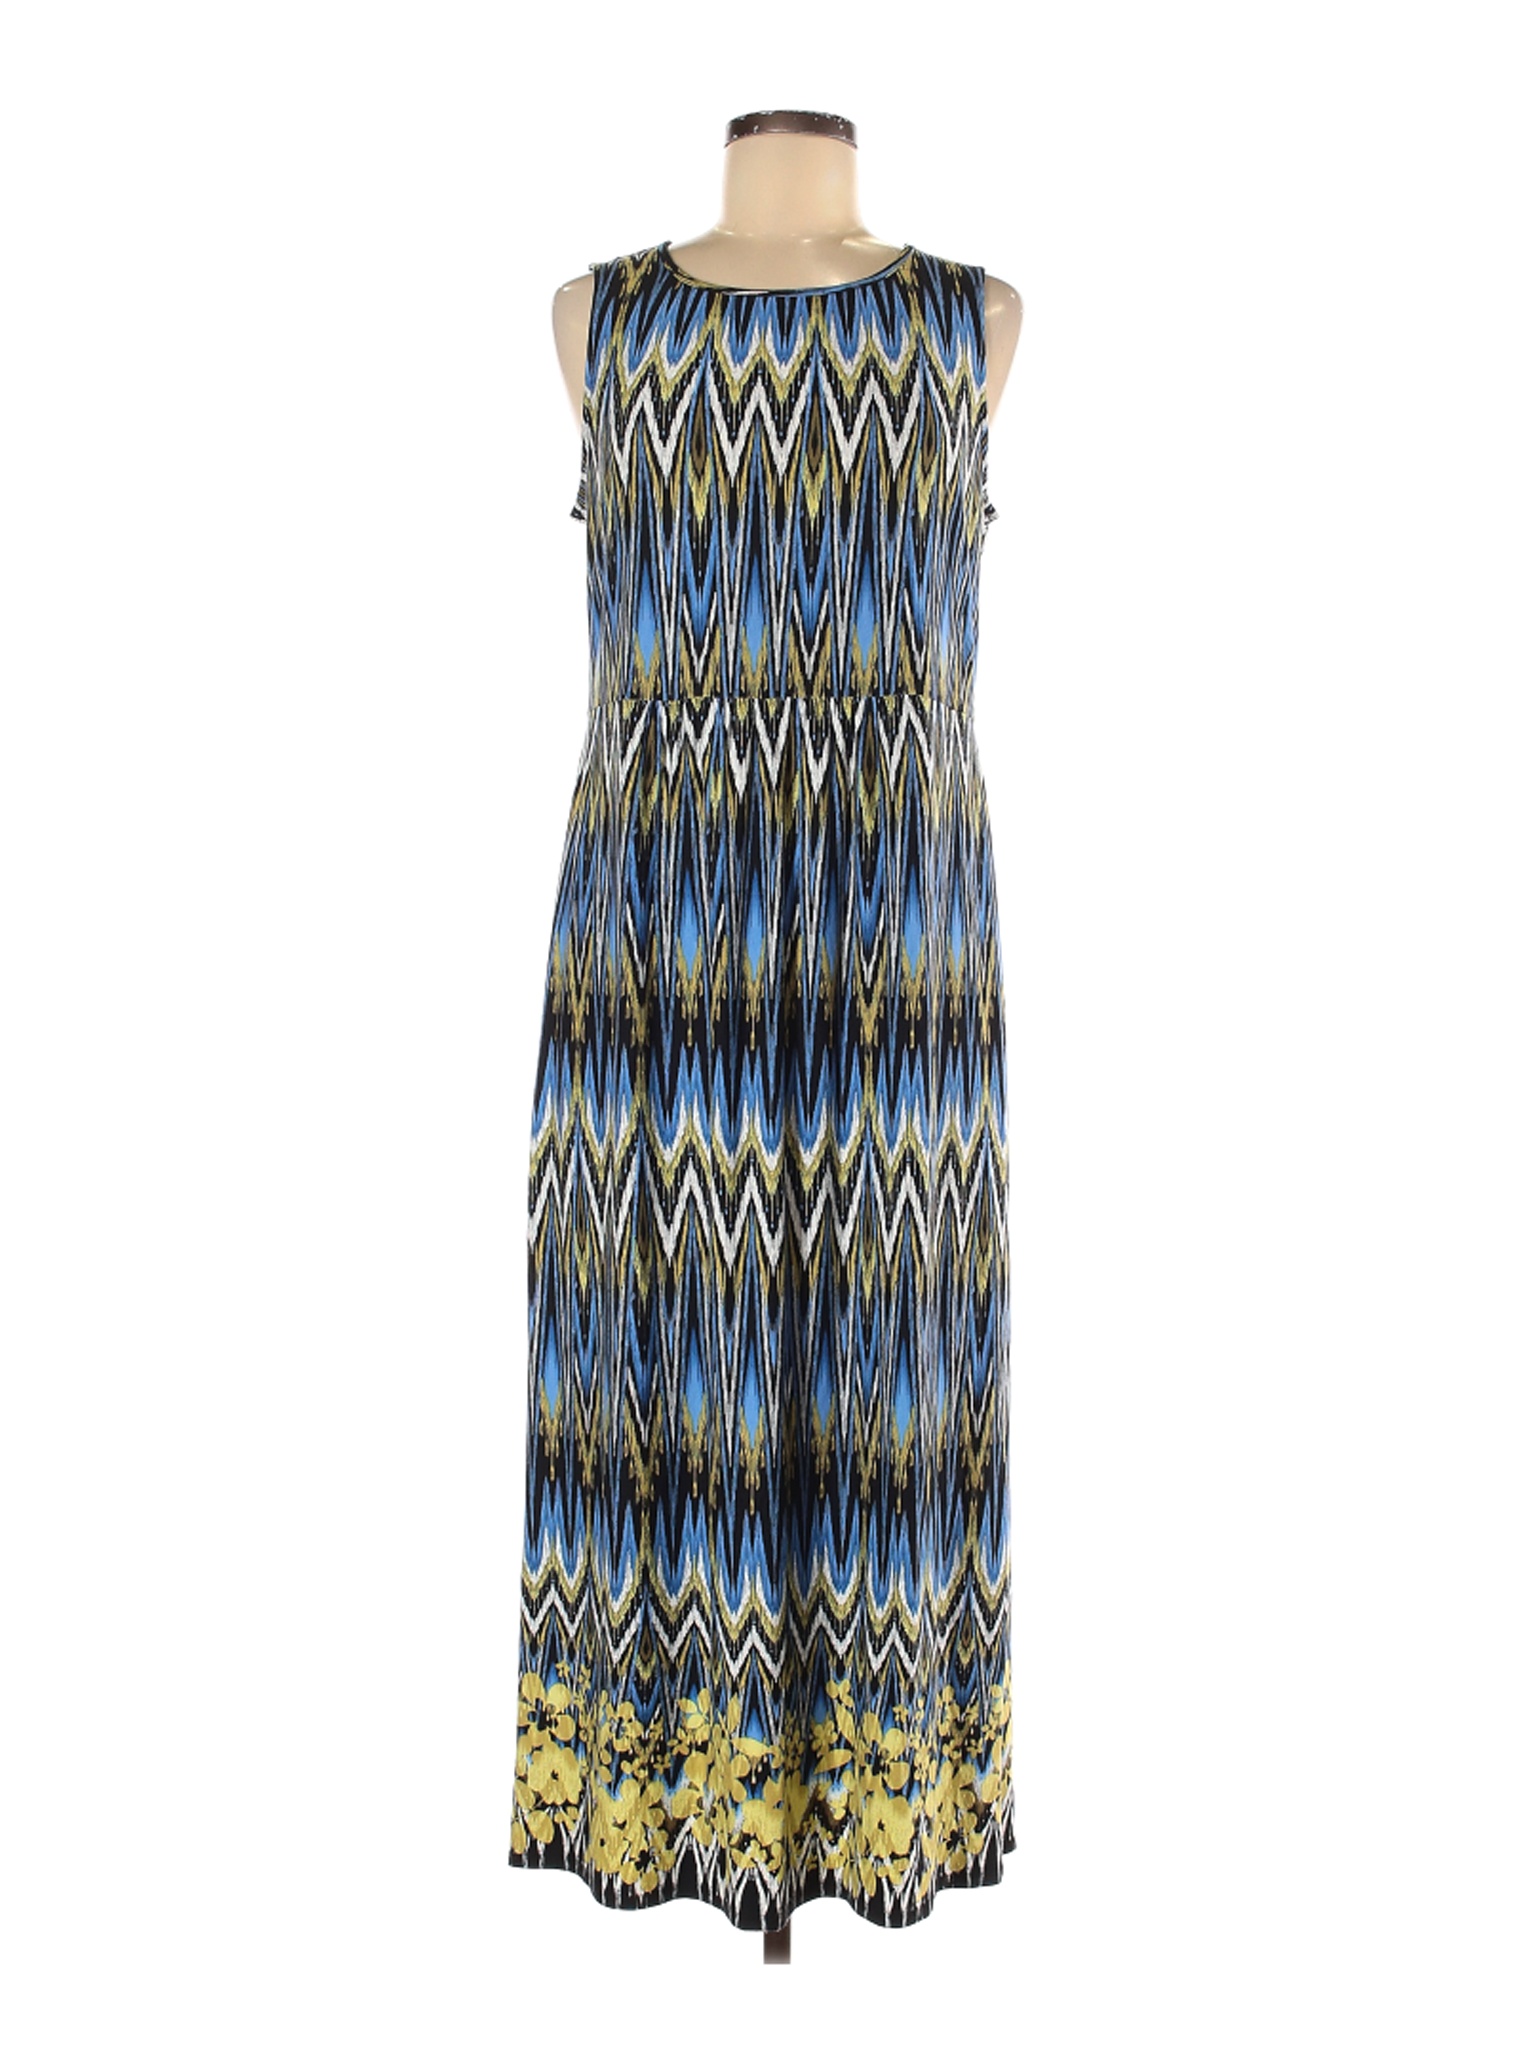 NWT J.Jill Women Blue Casual Dress M Petites | eBay